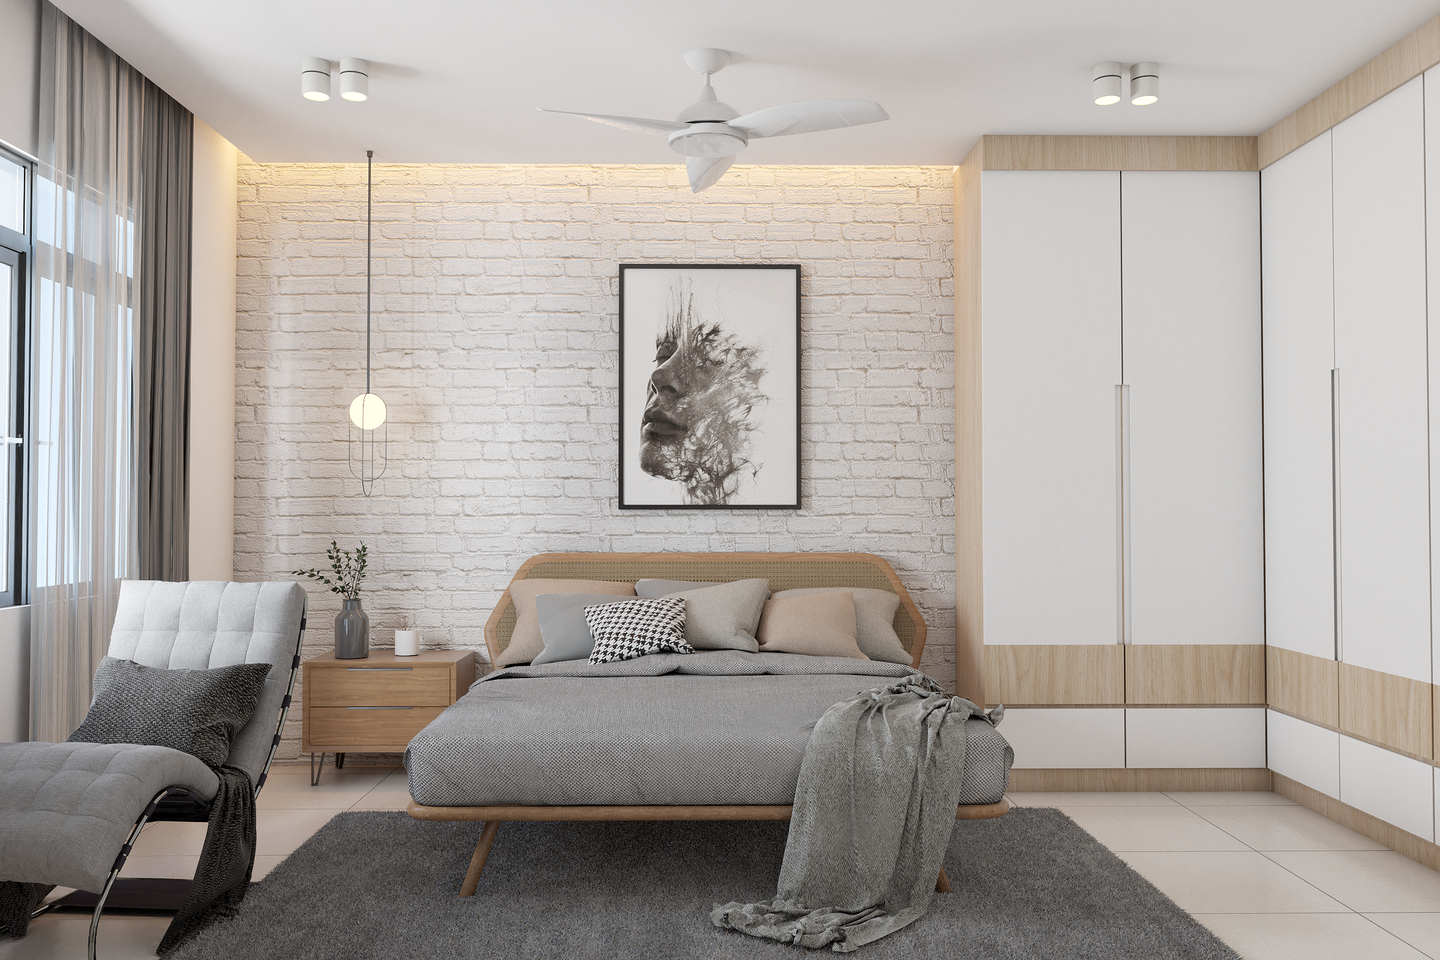 Scandinavian Bedroom Design with White and Wood Tones - Livspace